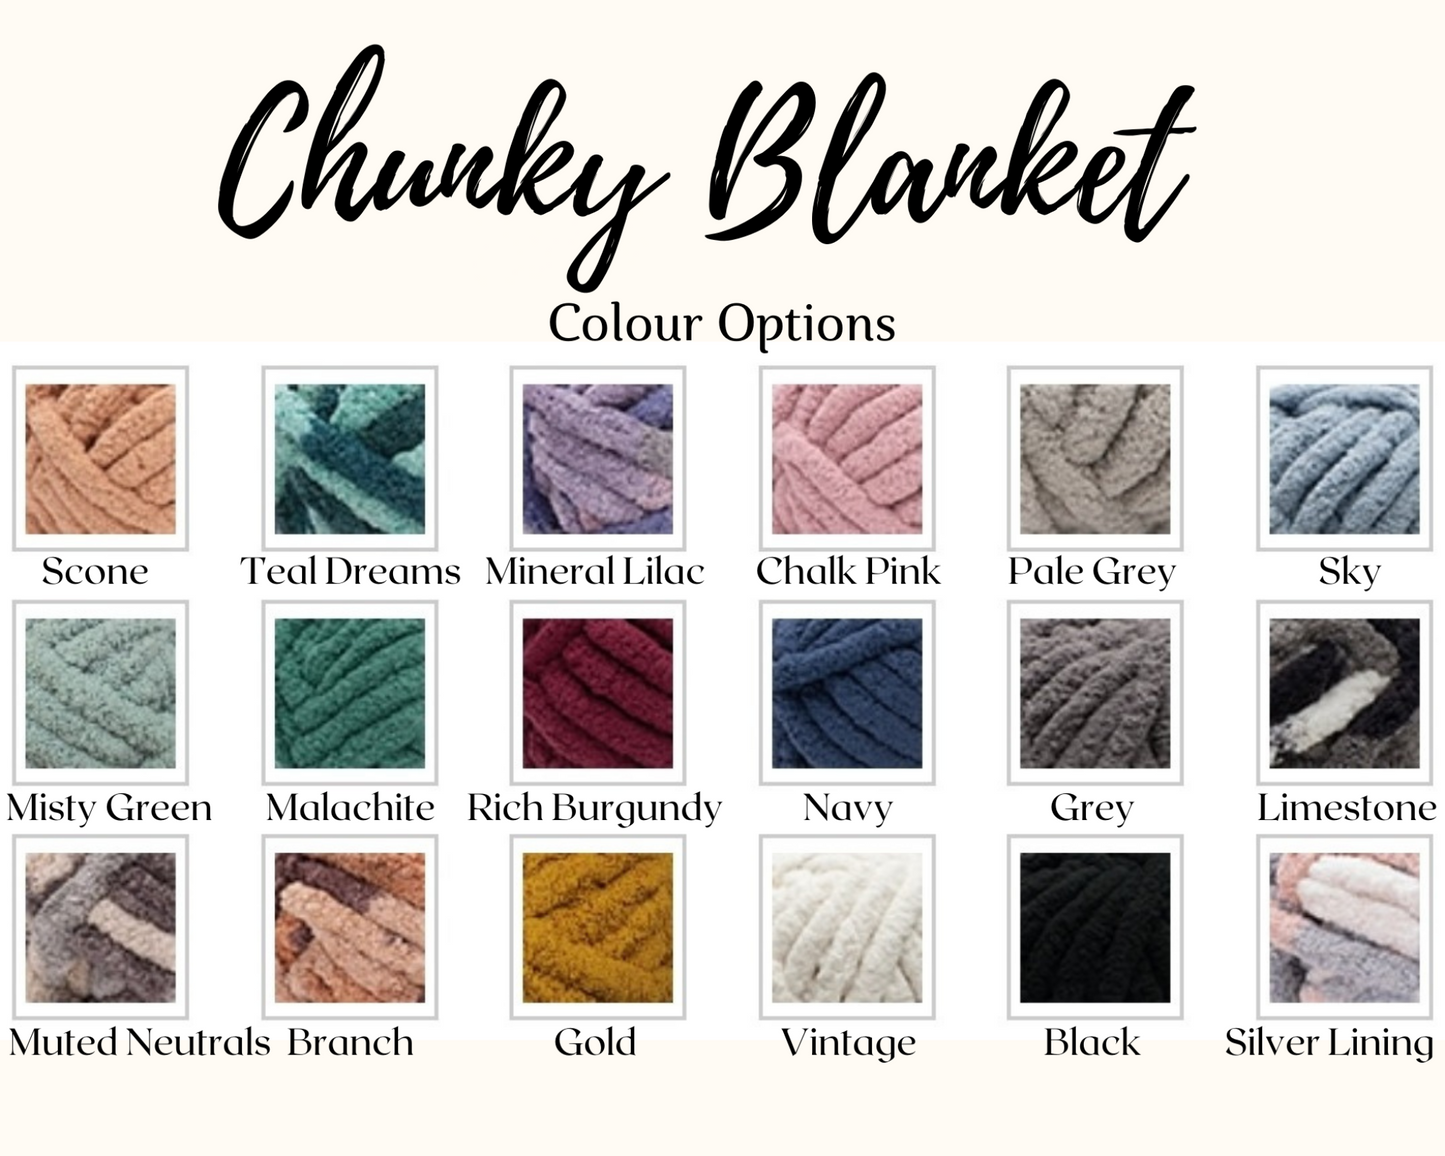 Chunky Blanket (DBL/FULL 75x60).